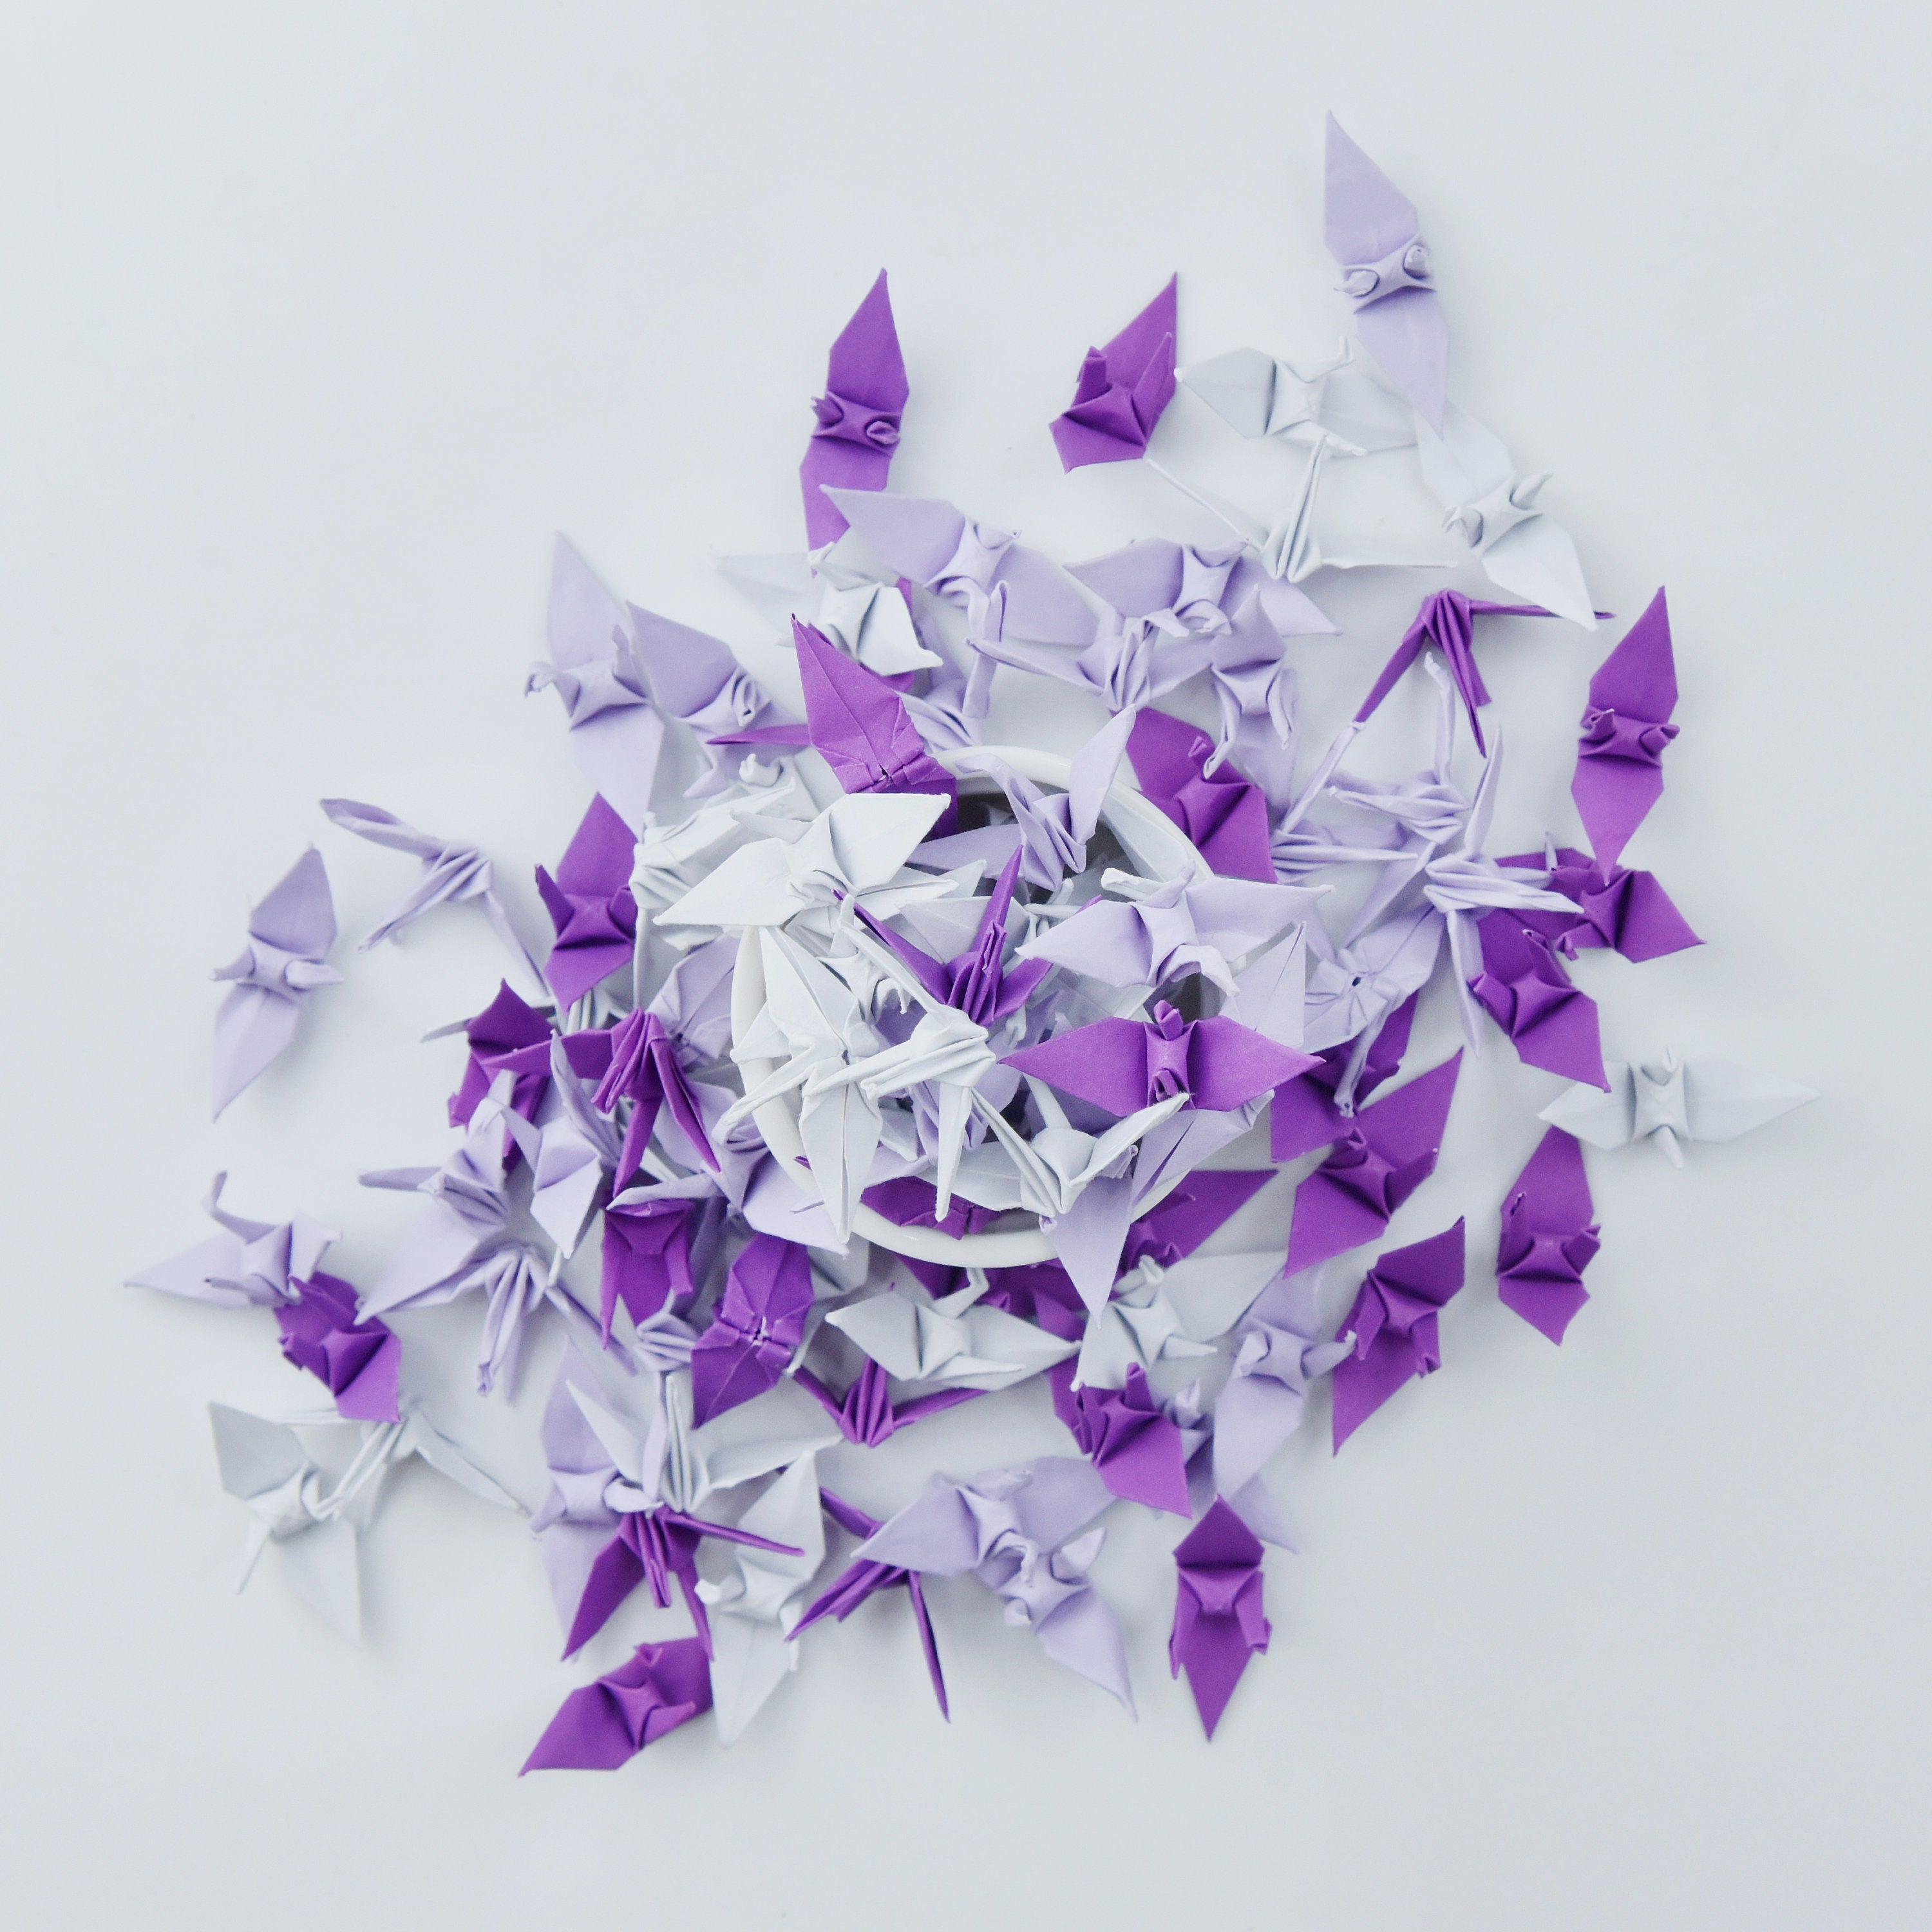 100 gru di carta origami tonalità viola - gru origami - prefabbricate - piccole 1,5x1,5 pollici per decorazioni di nozze, regali di anniversario, San Valentino